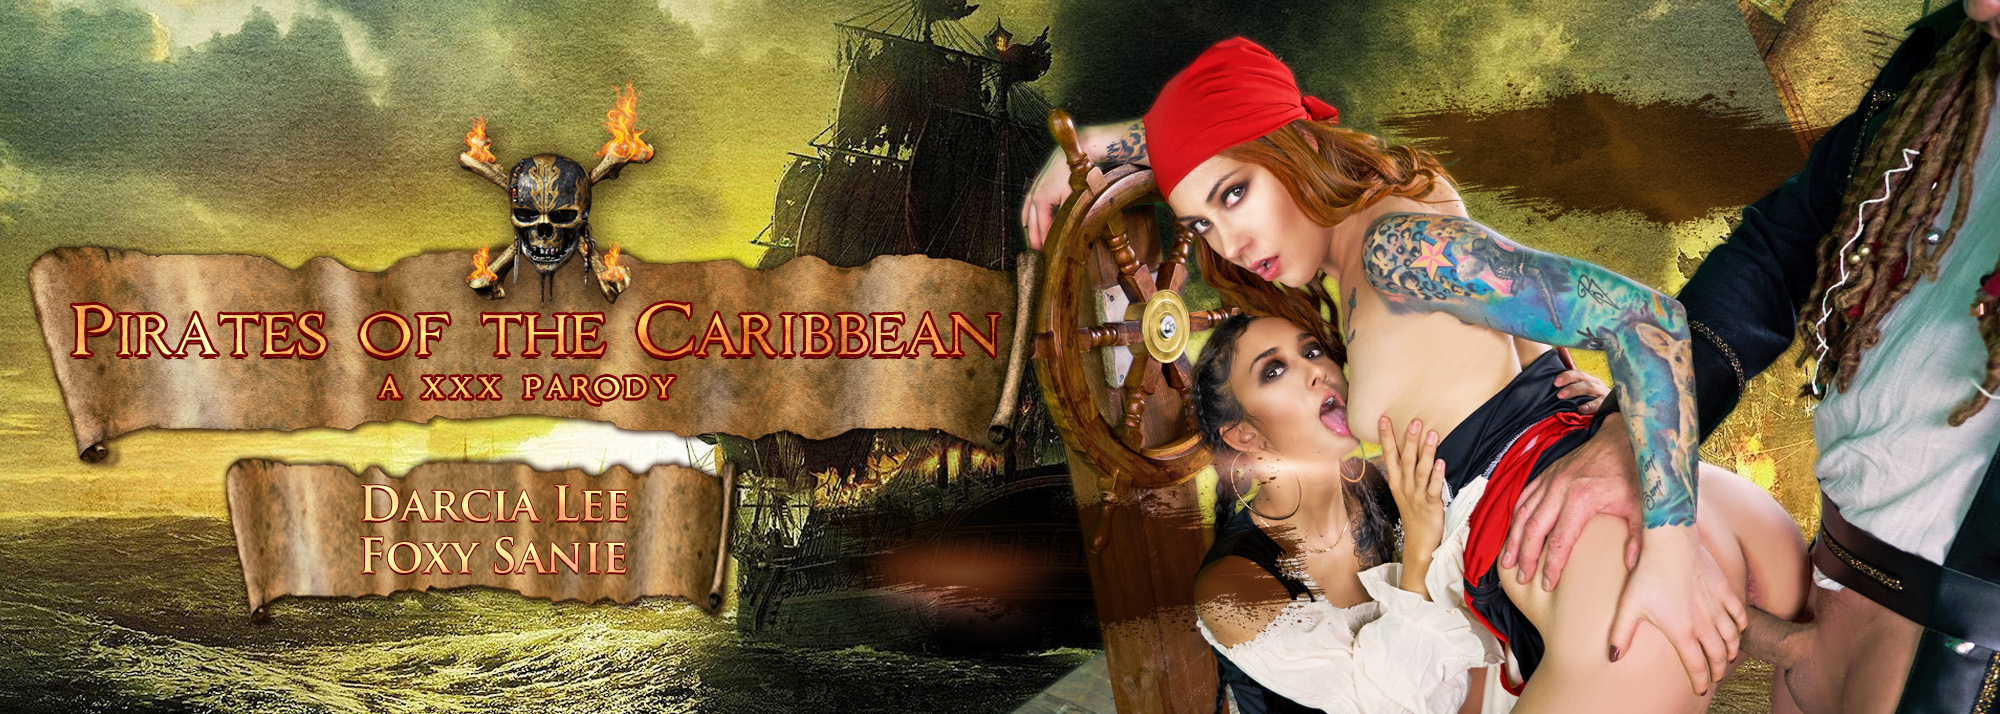 Pirates of the Caribbean (A Porn Parody) - VR Video, Starring: Foxy Sanie, Darce Lee